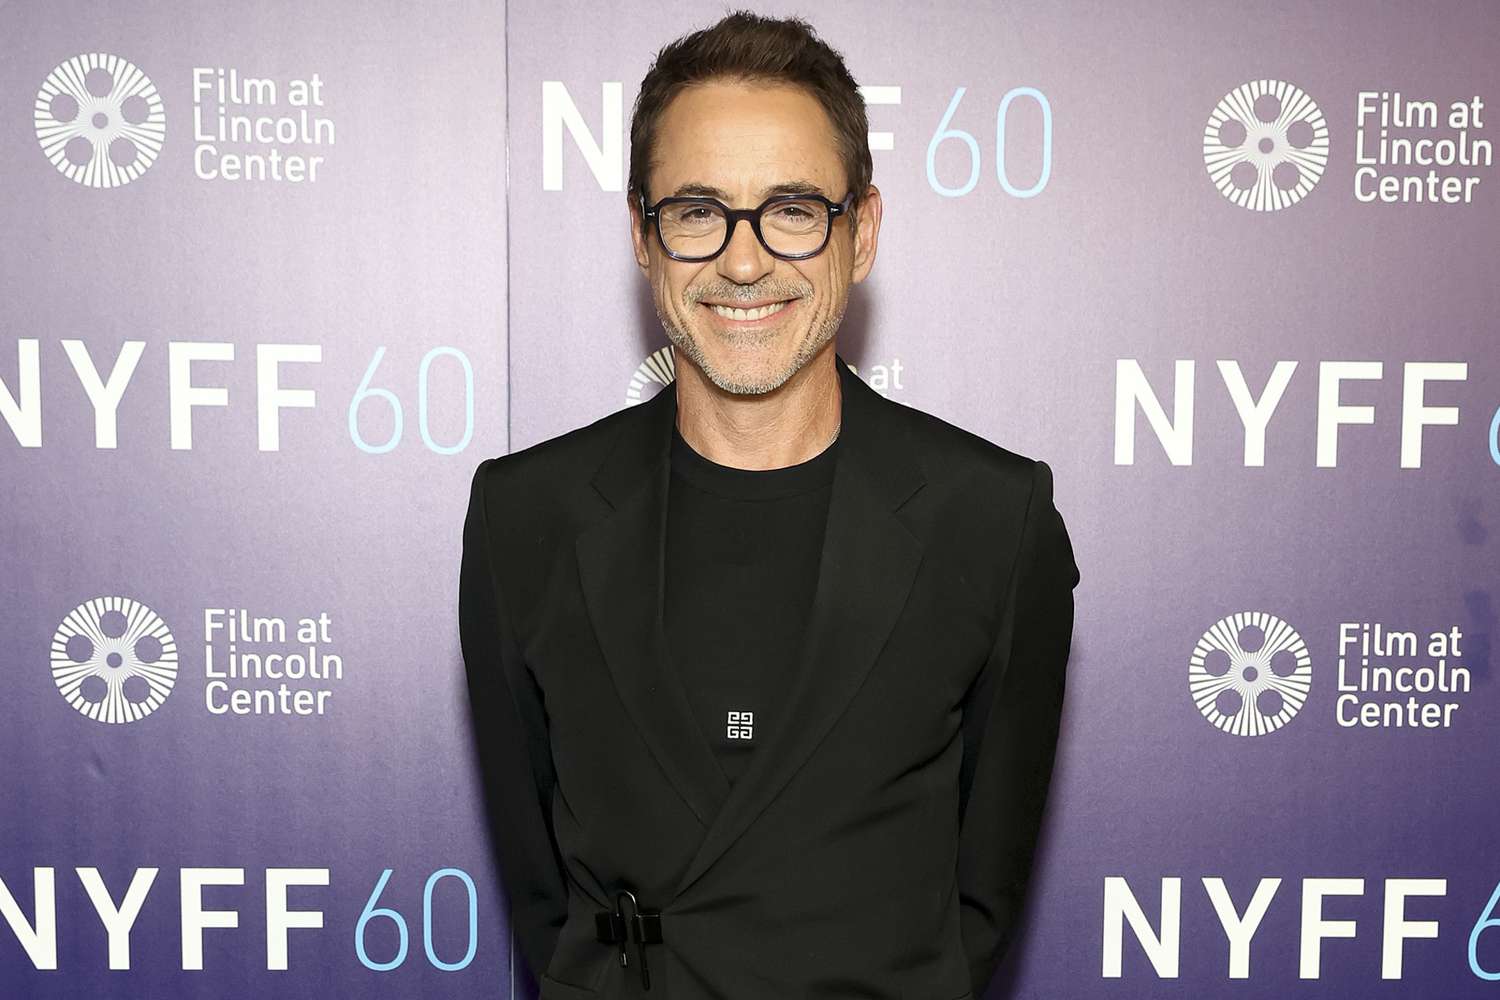 Robert Downey Jr. at the Sr. New York Film Festival premiere screening on Oct. 10, 2022